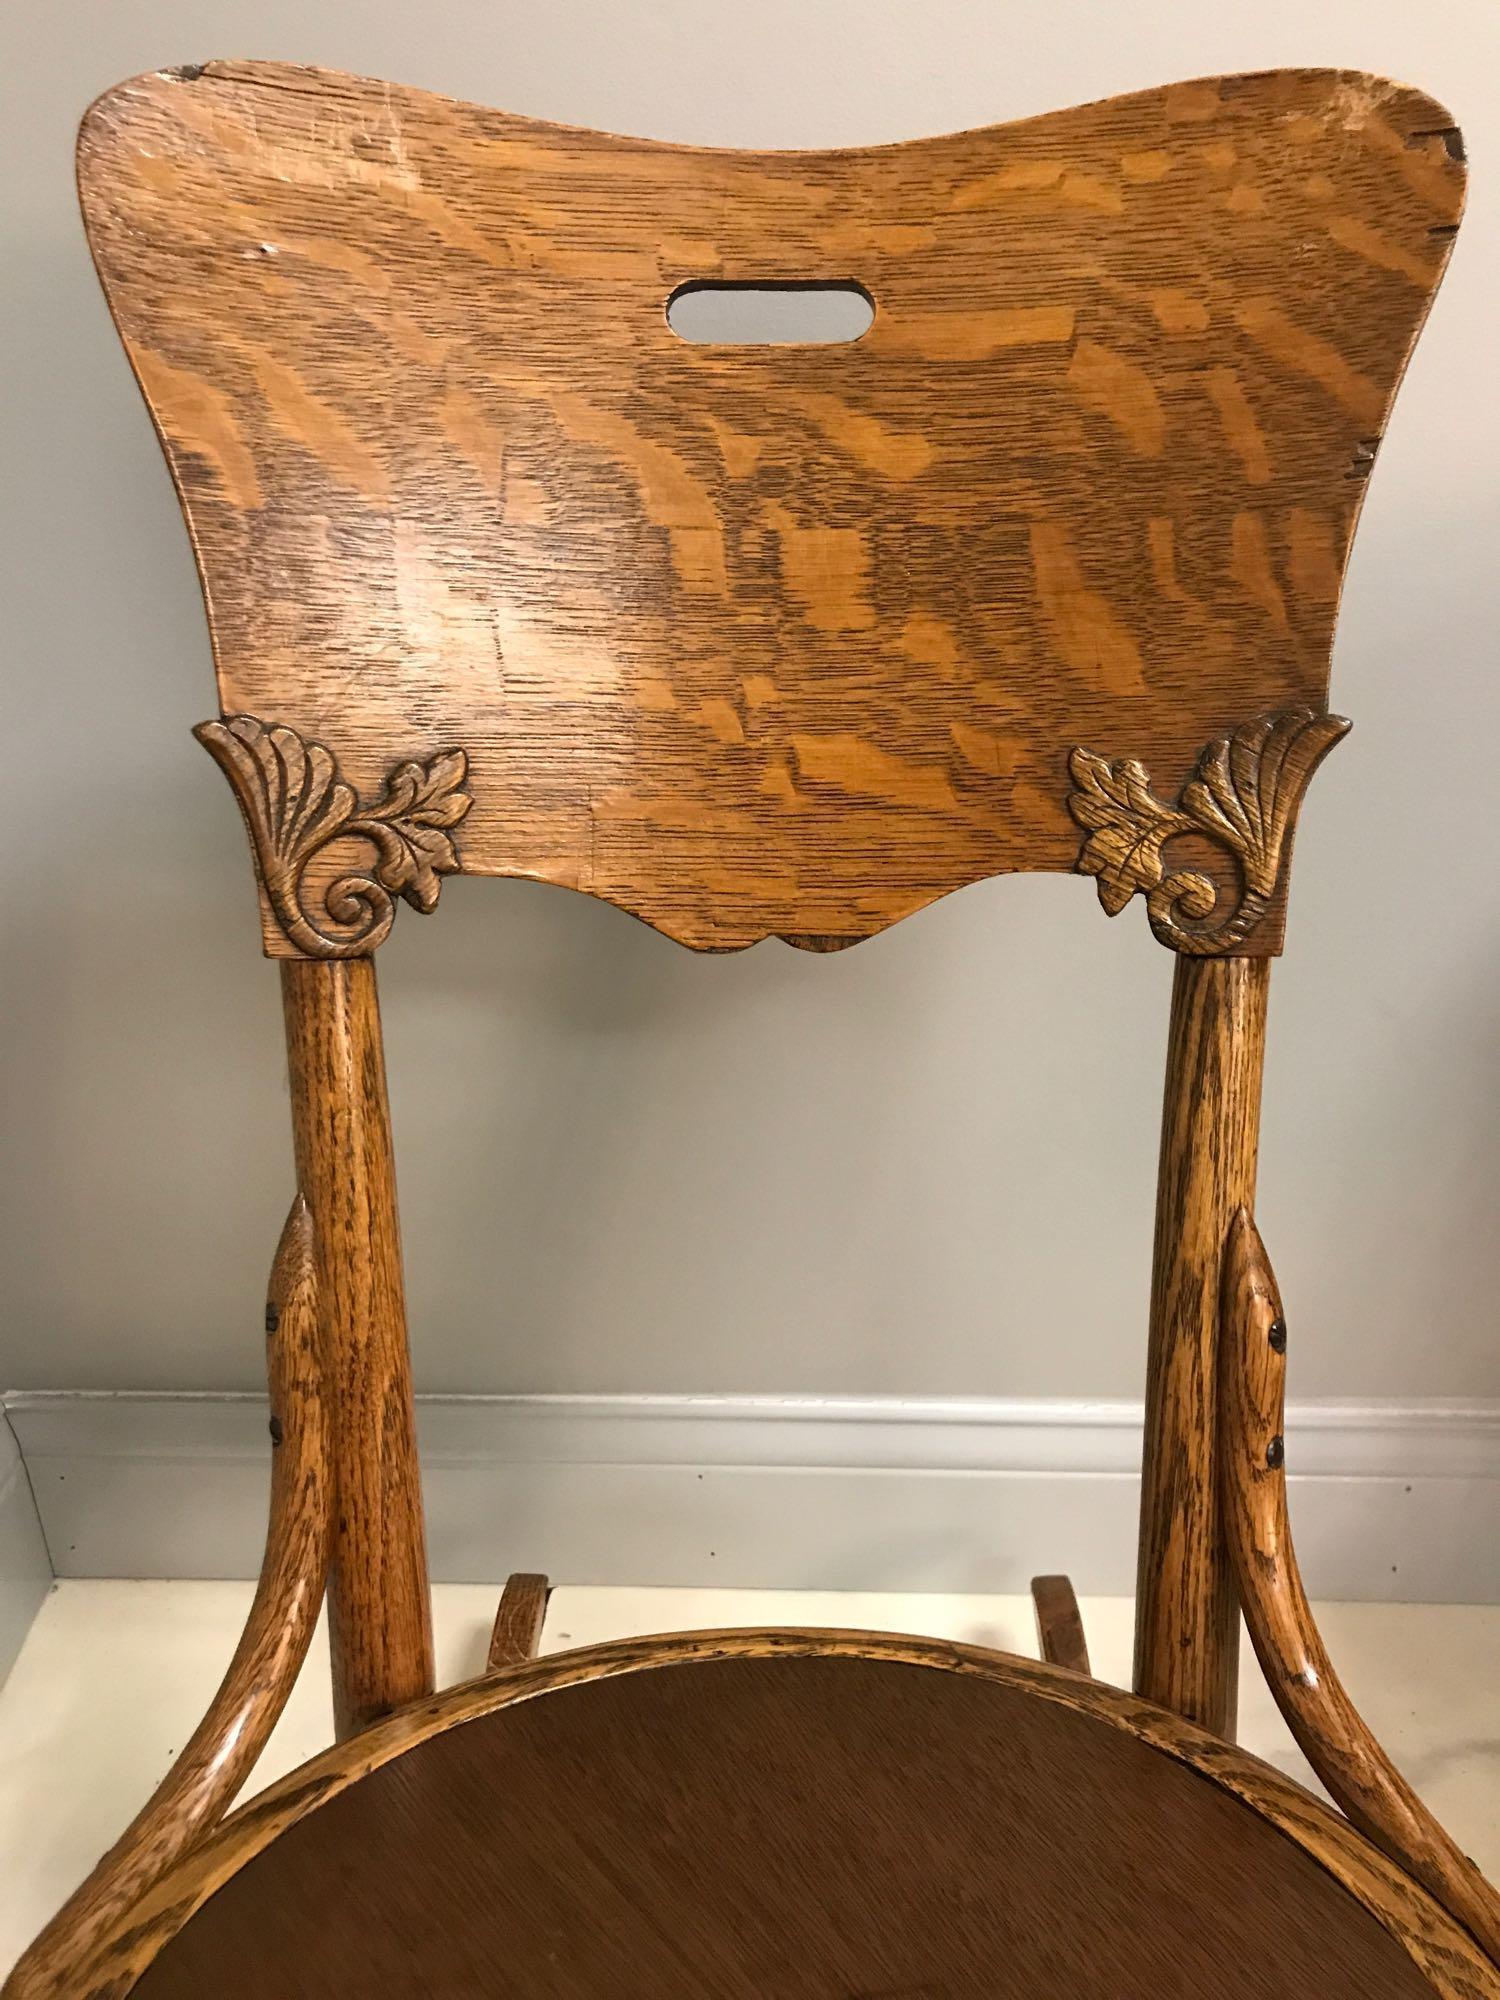 Vintage Oak Rocking Chair